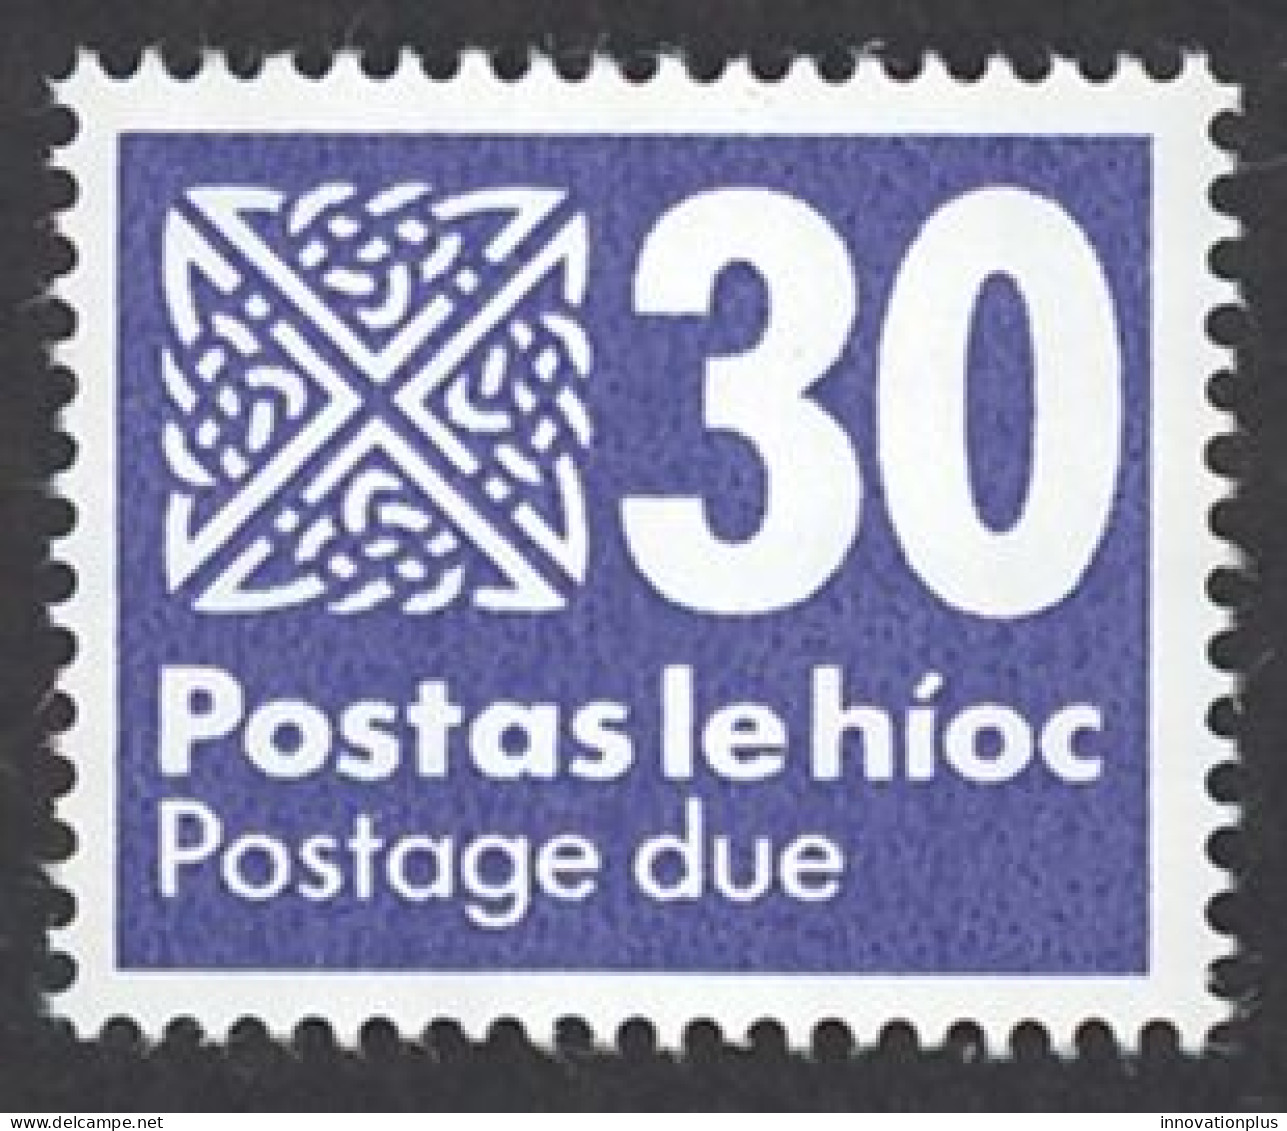 Ireland Sc# J35 MNH 1985 30p Postage Due - Postage Due